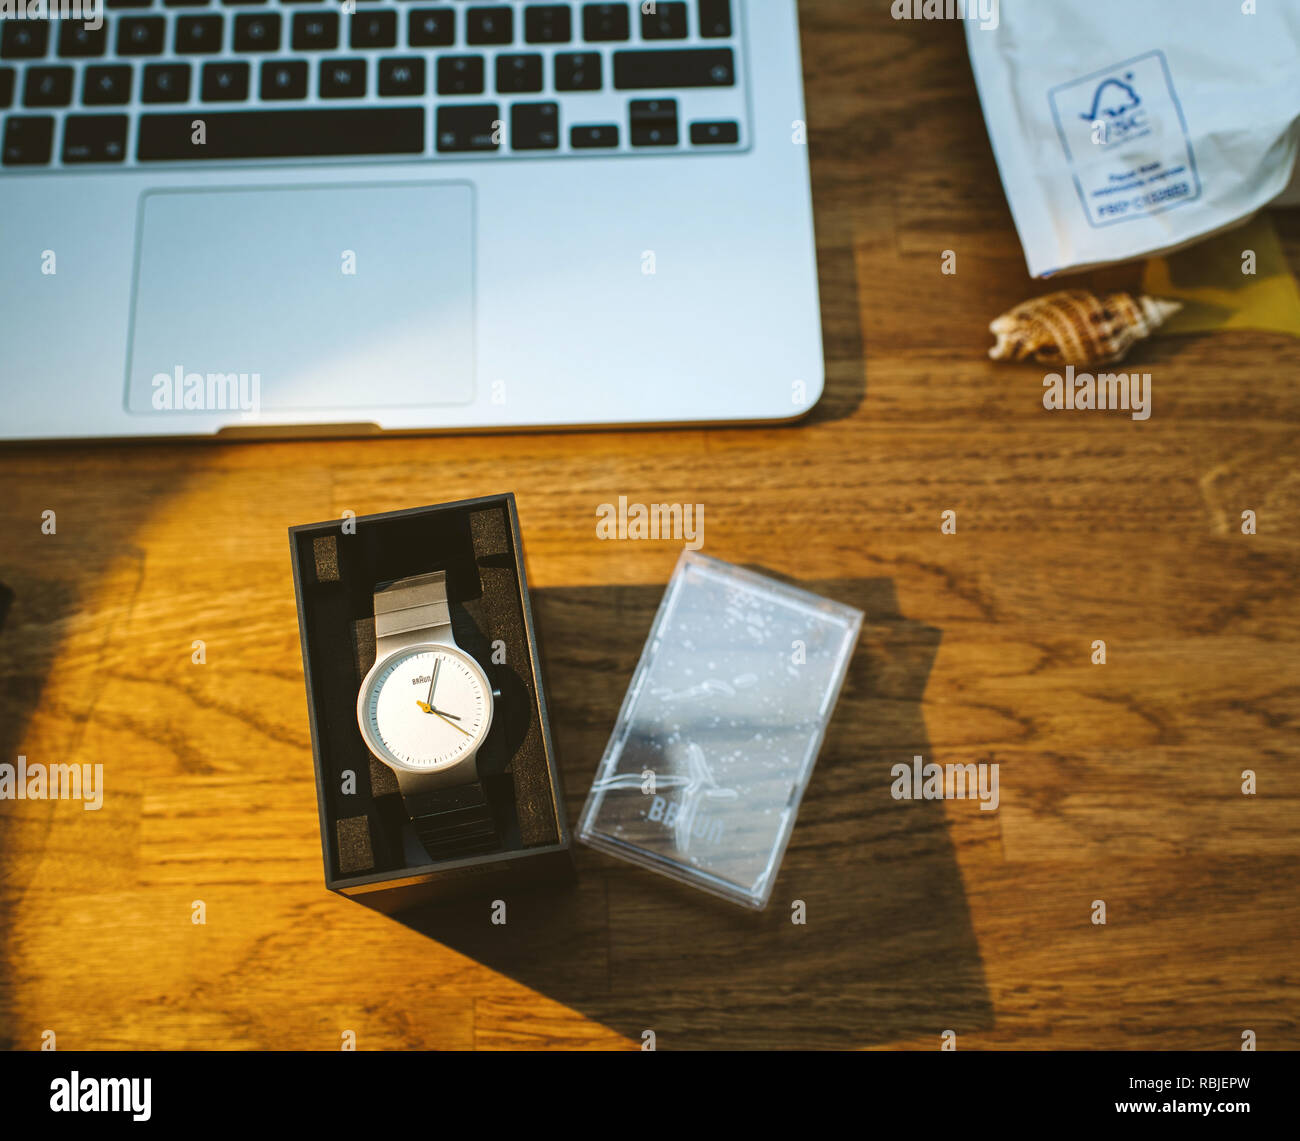 PARIS, FRANCE - DEC 5, 2017: unboxing new Braun German watch clock on work table with Apple MacBook retina laptop working Stock Photo